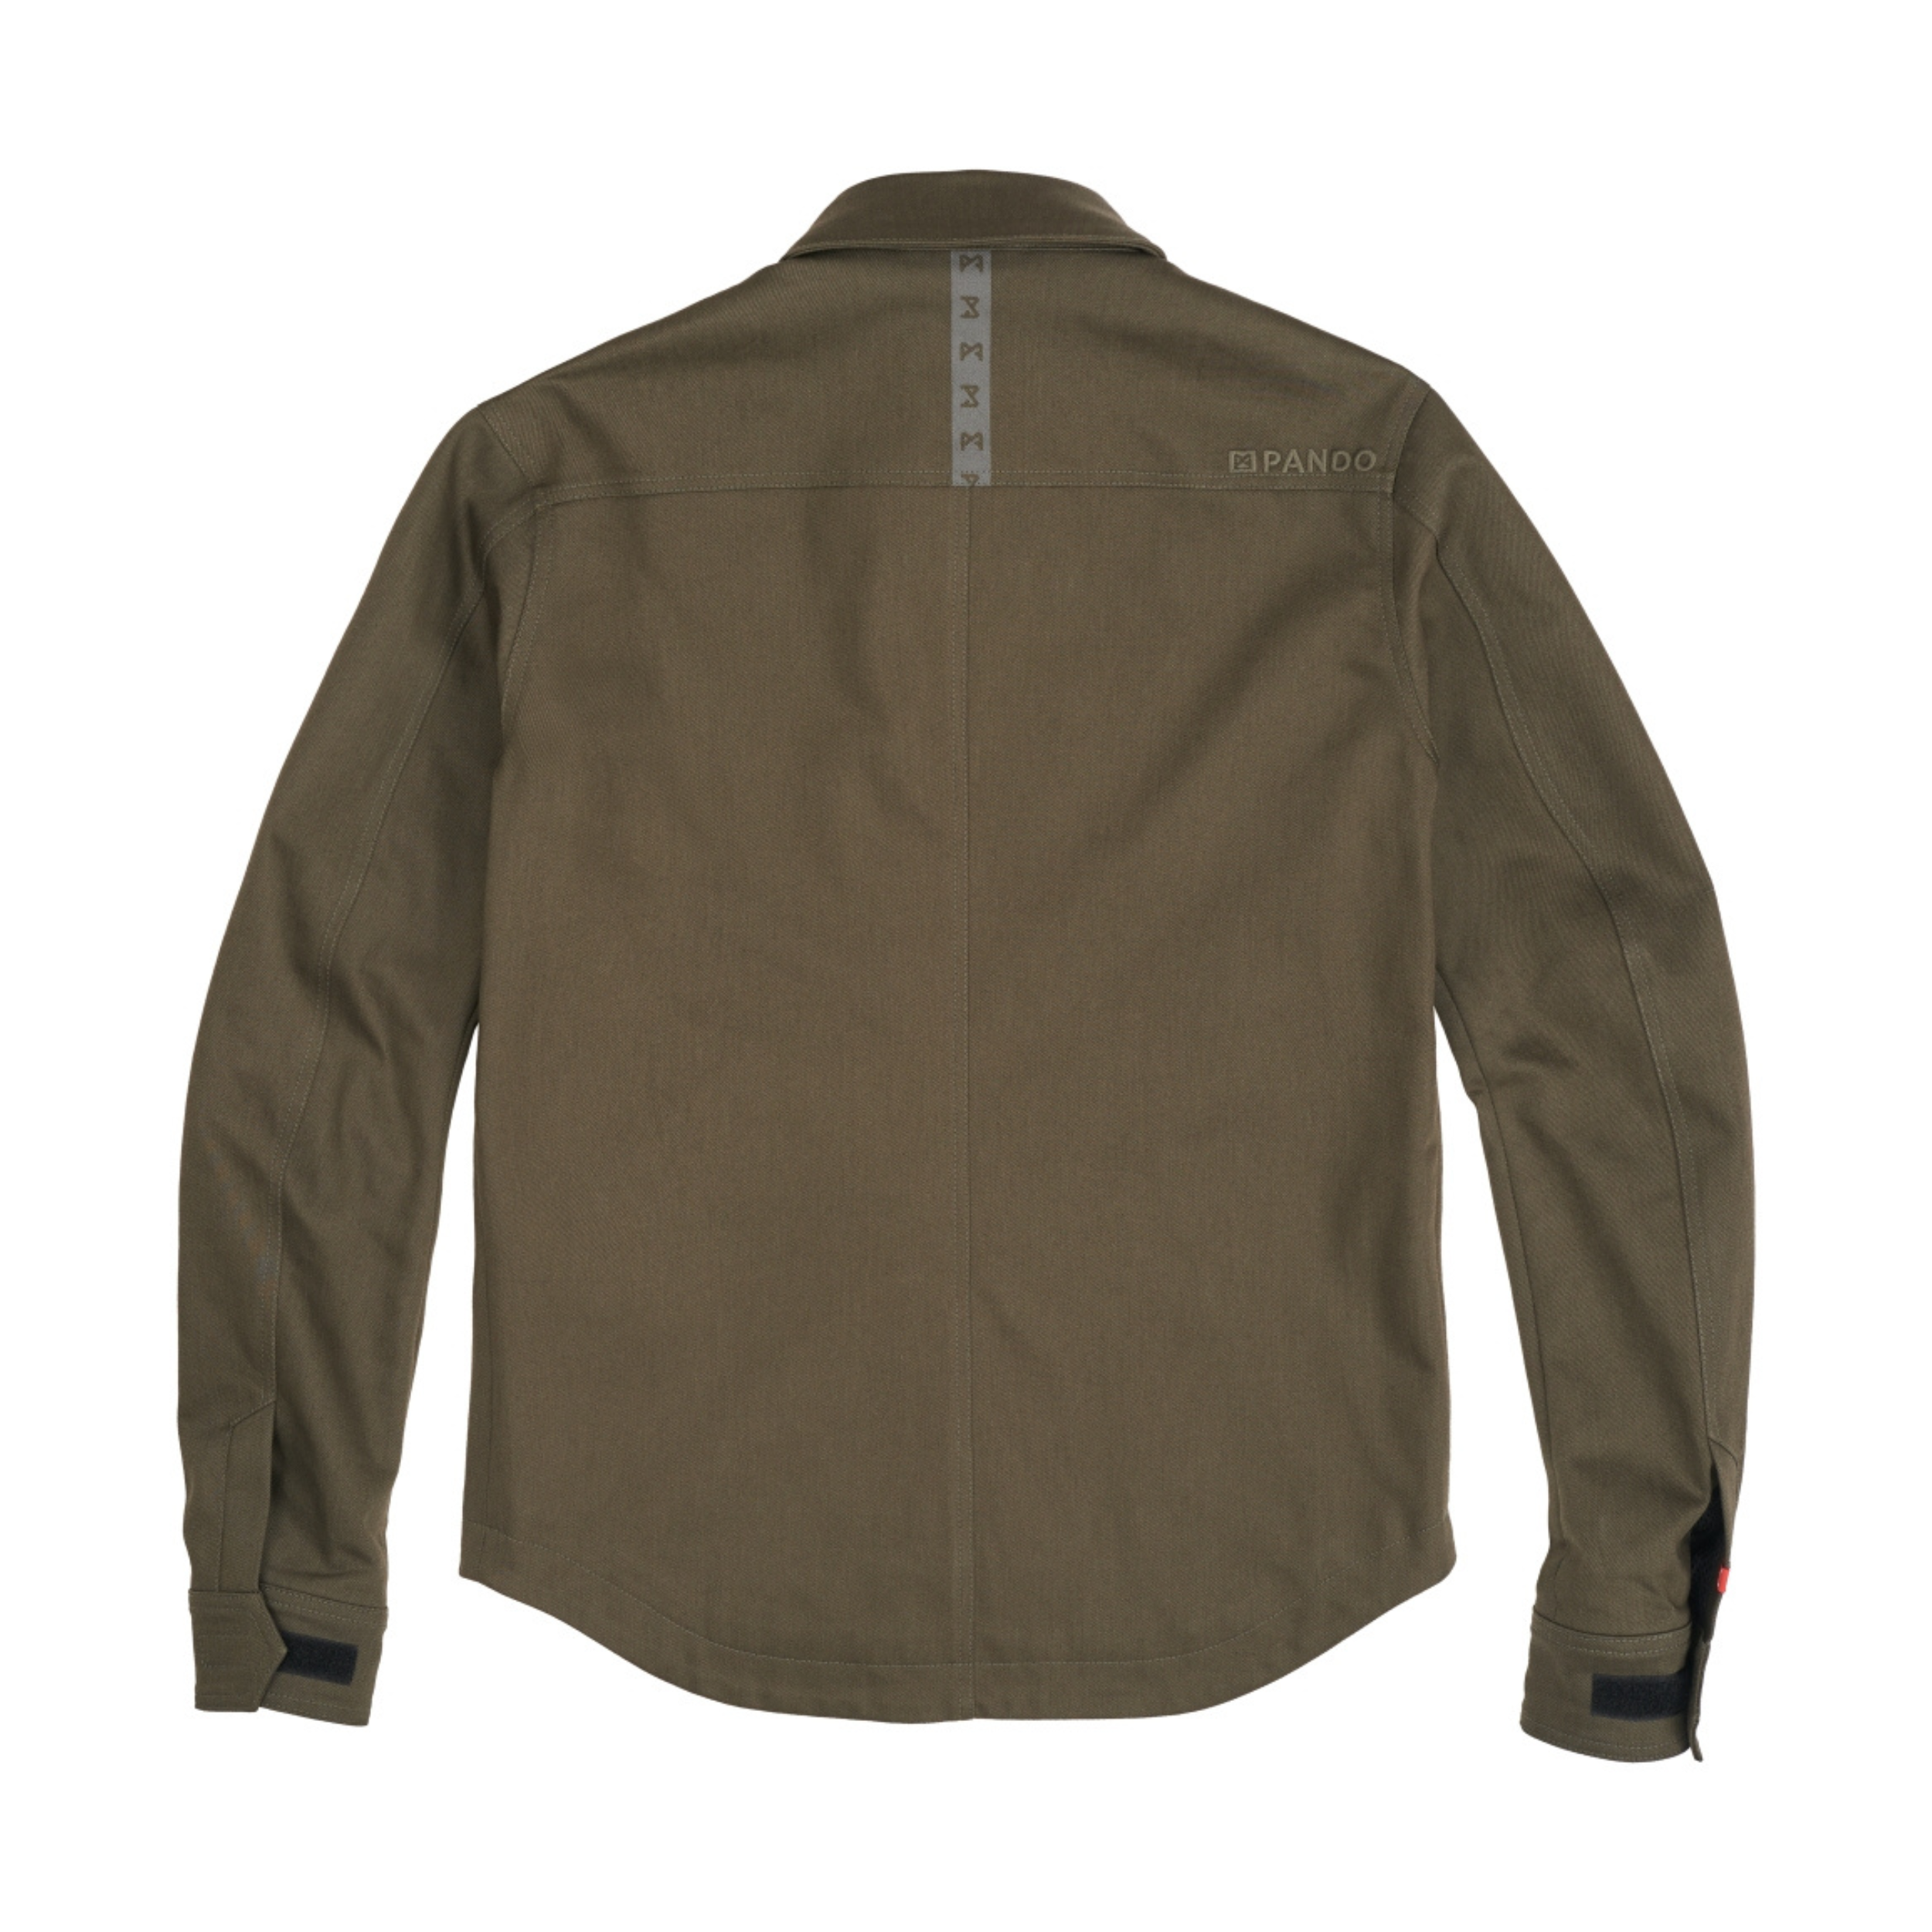 Pando Moto Capo Cor 02 Men's Shirt Jacket - Green